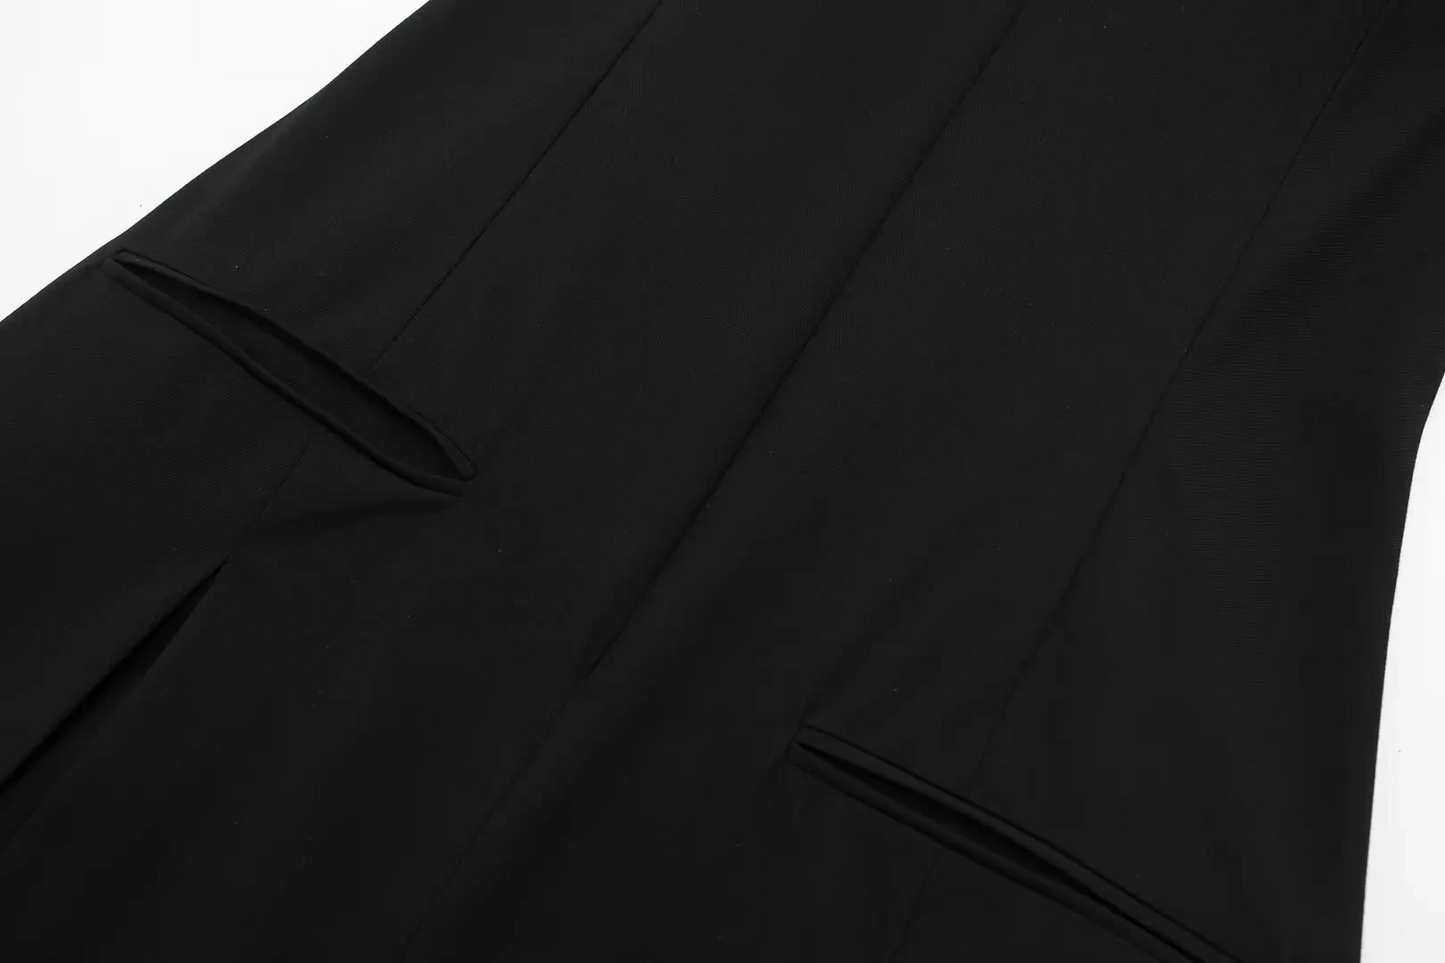 Black Polo Short Dress